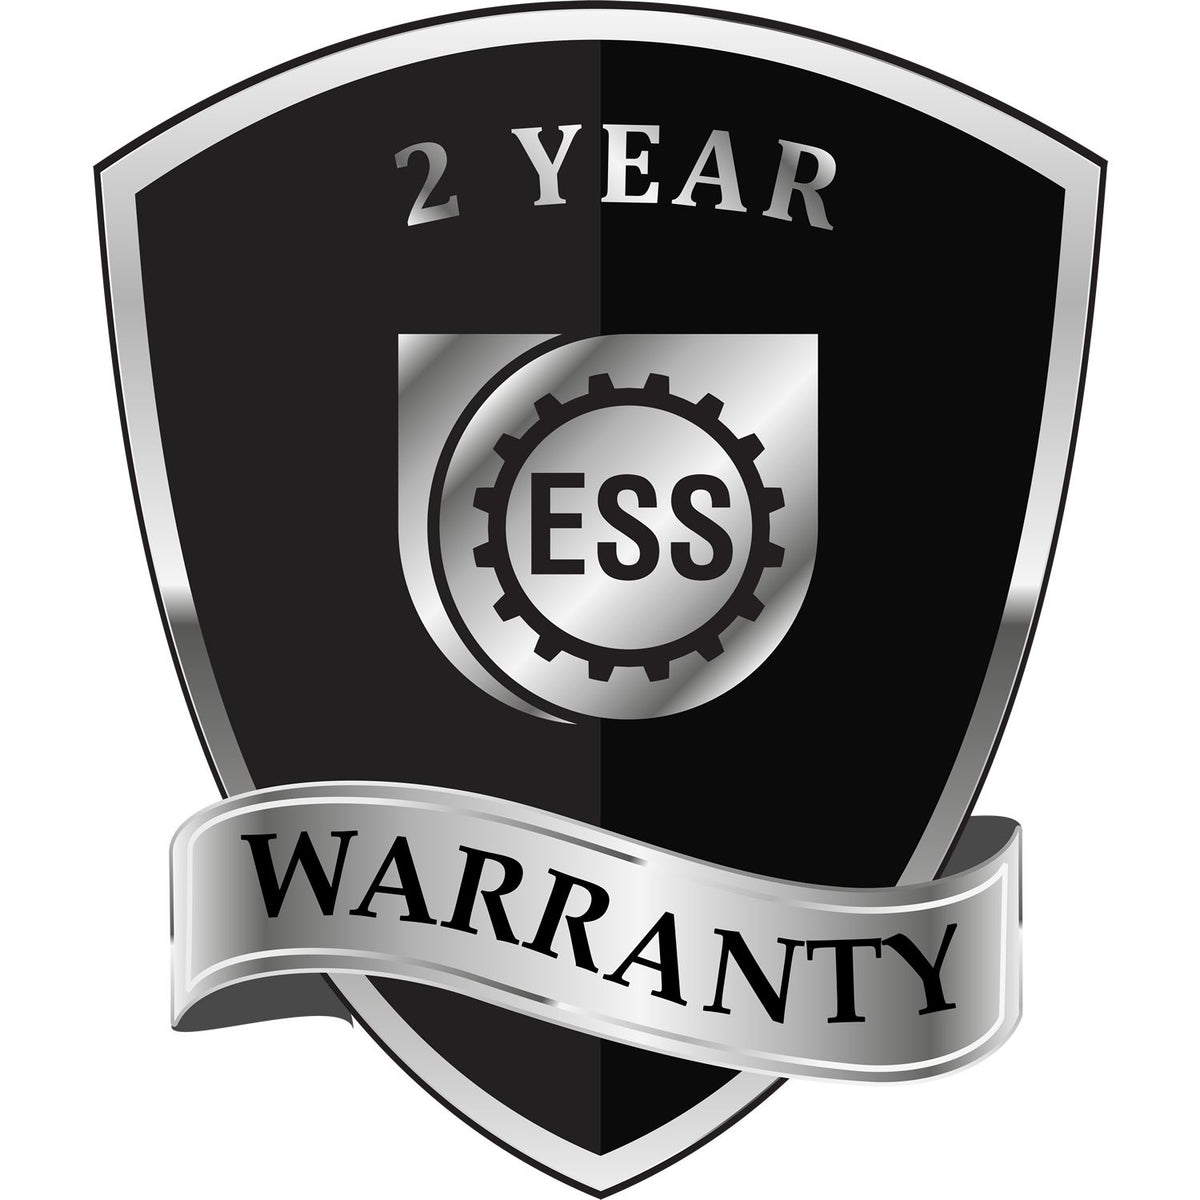 A black and silver badge or emblem showing warranty information for the Hybrid North Carolina Landscape Architect Seal